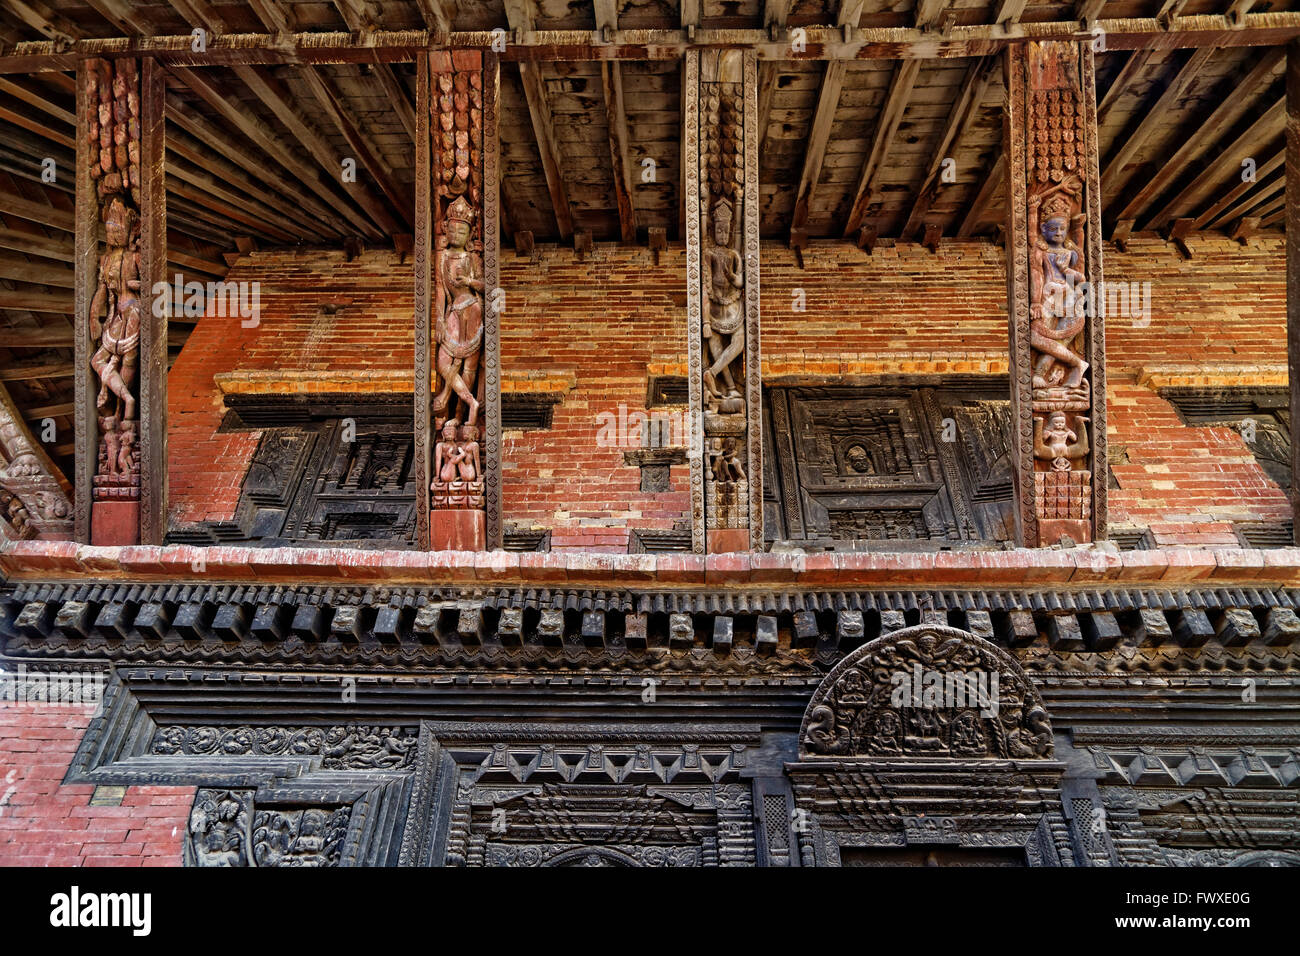 Wooden rafter and door in temple of Bhaktapur, Kathmandu Valley, Nepal Stock Photo